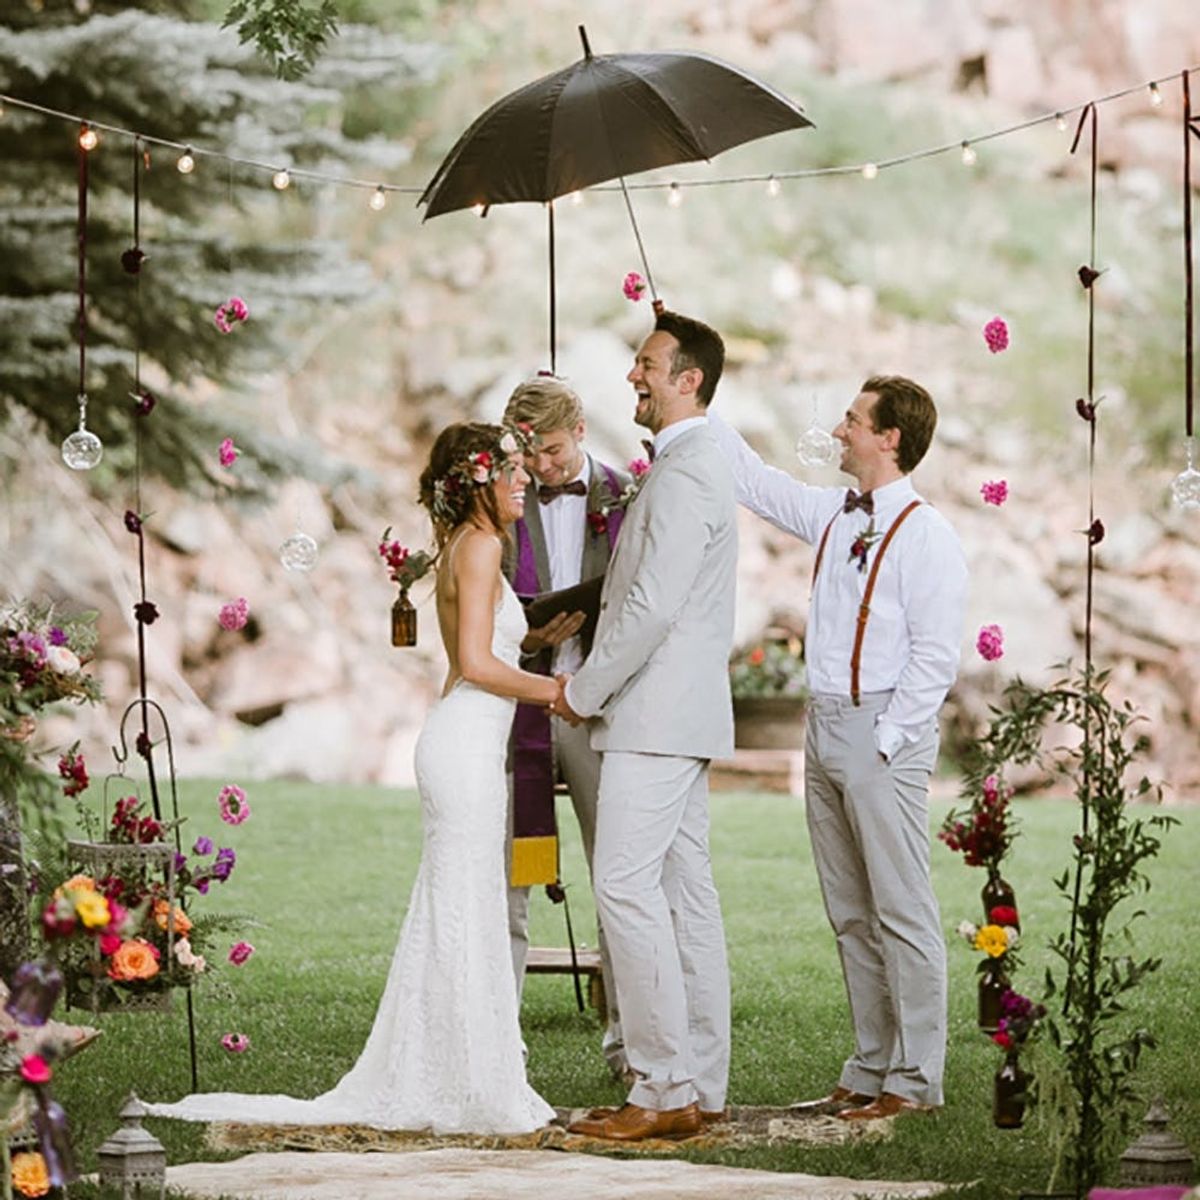 13 Ways to Rock Rainy Wedding Day Photos